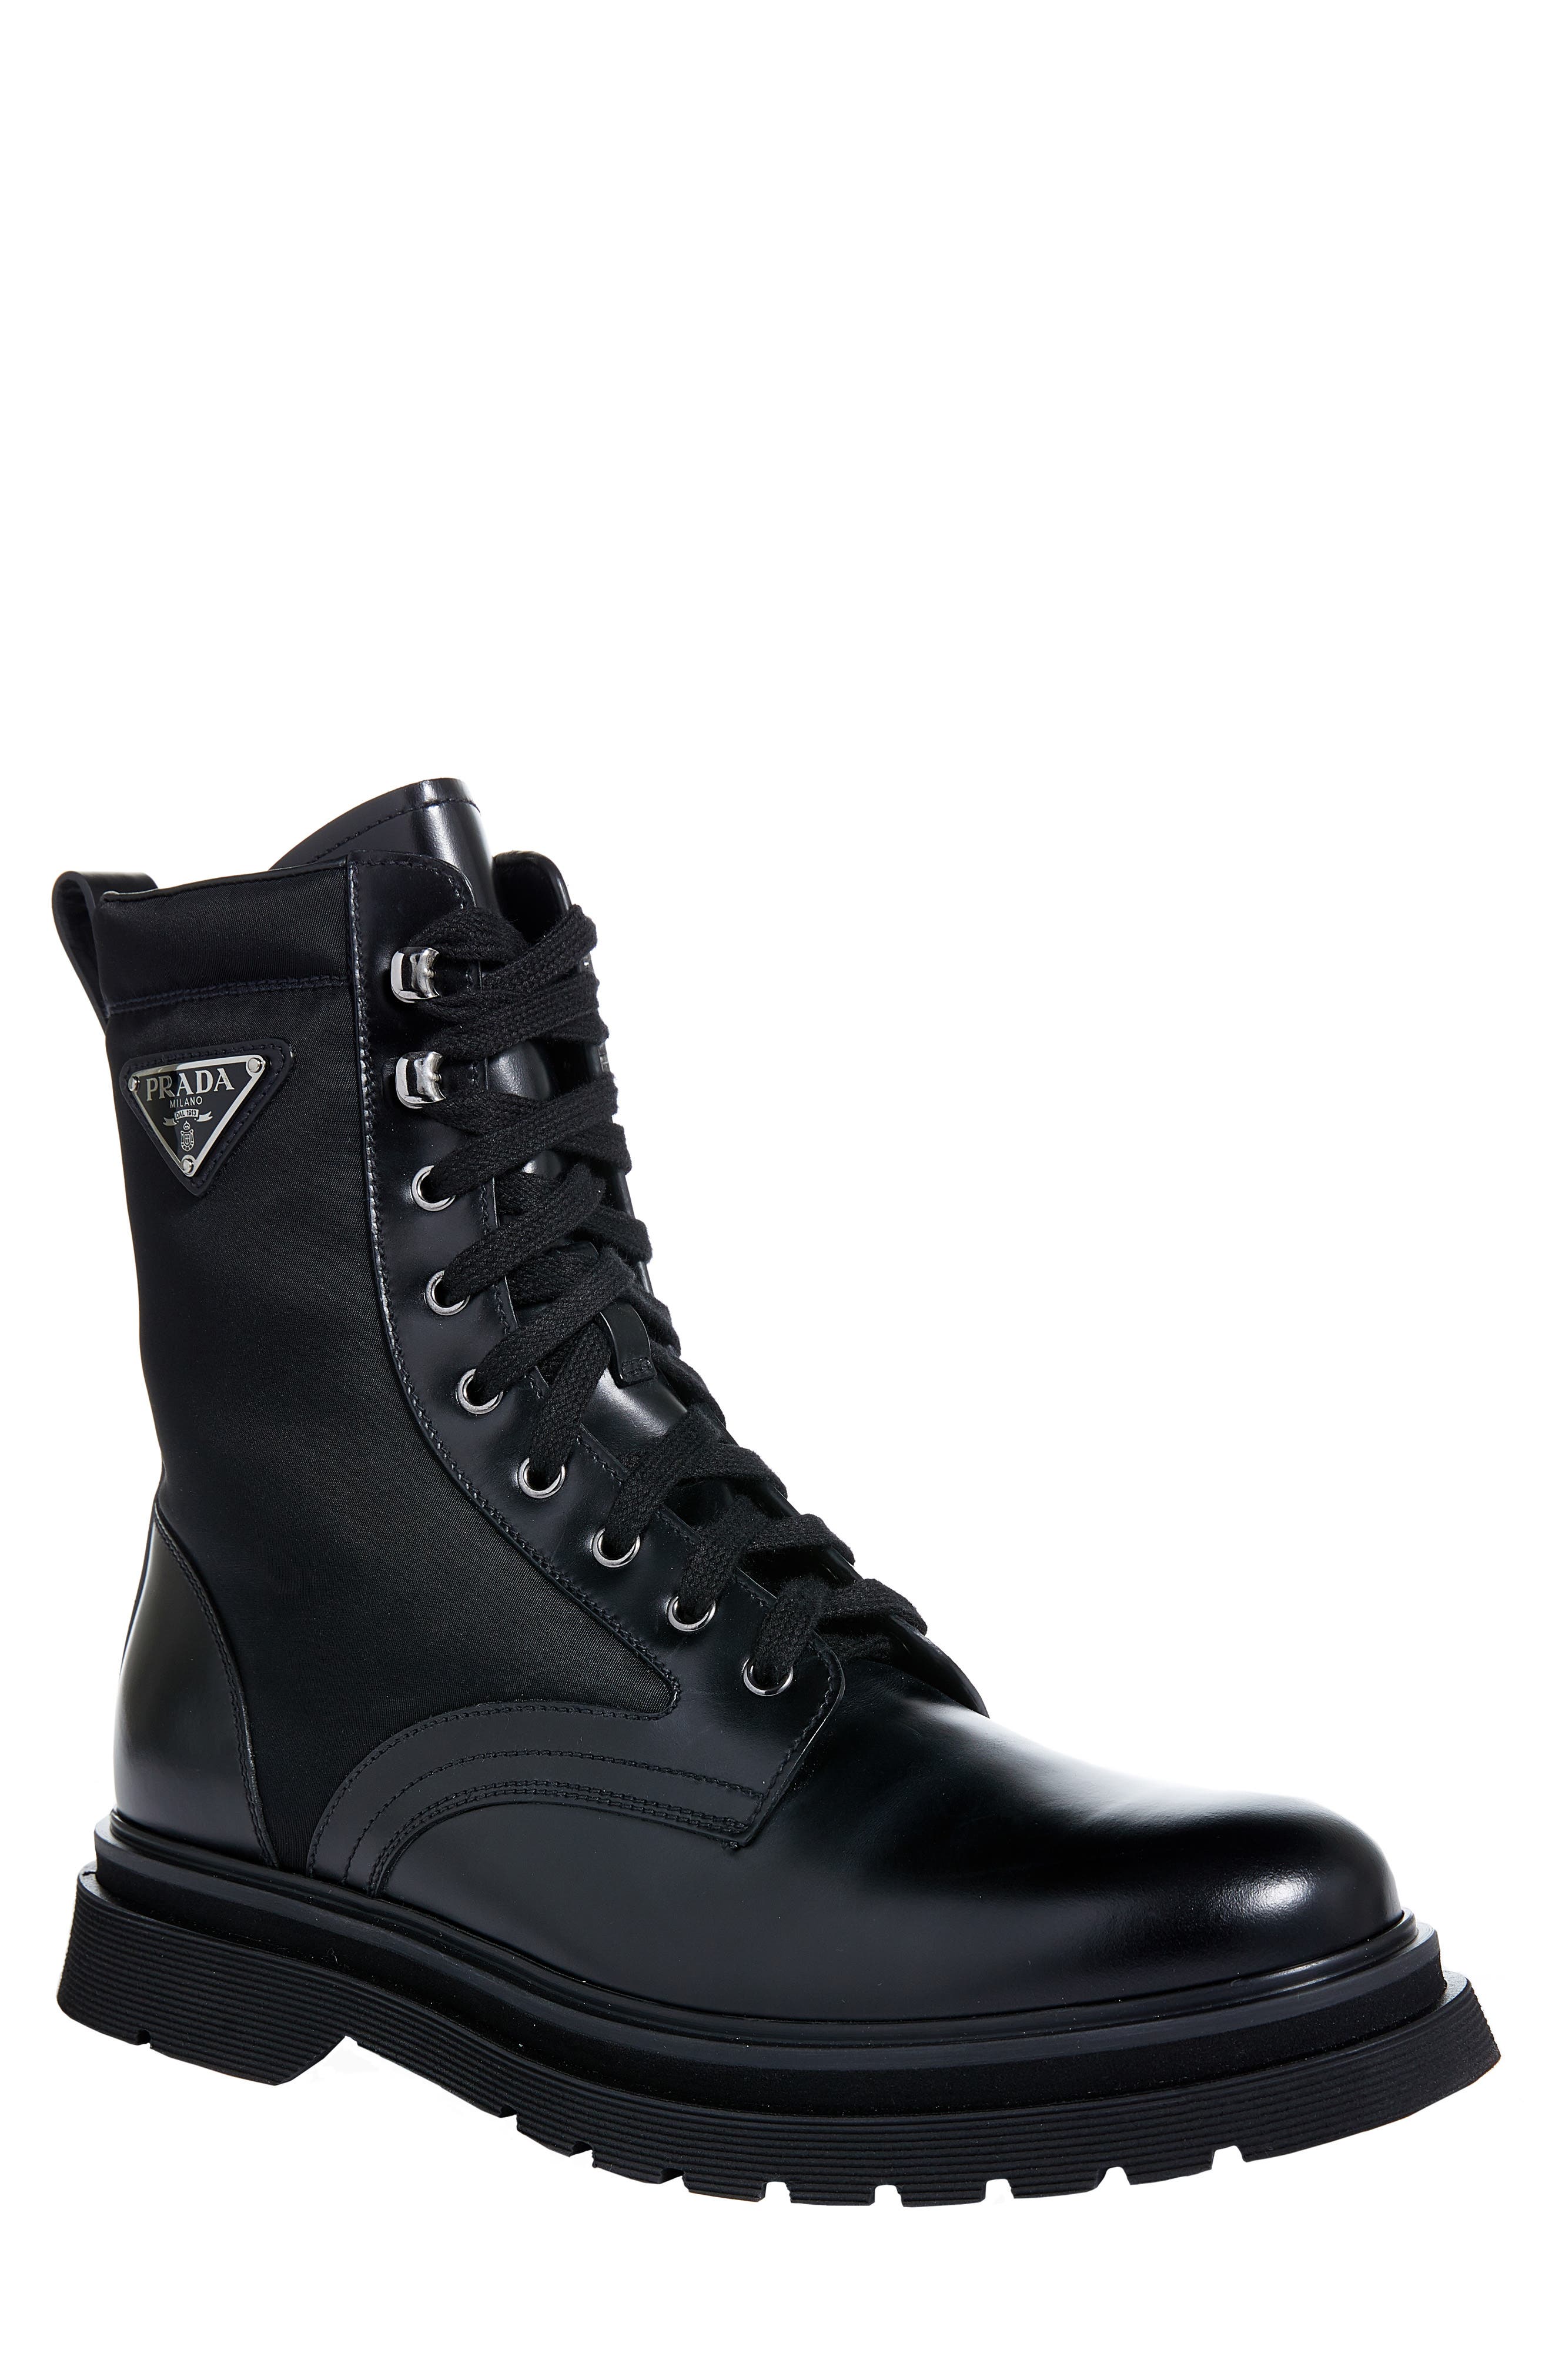 prada black aftershave boots